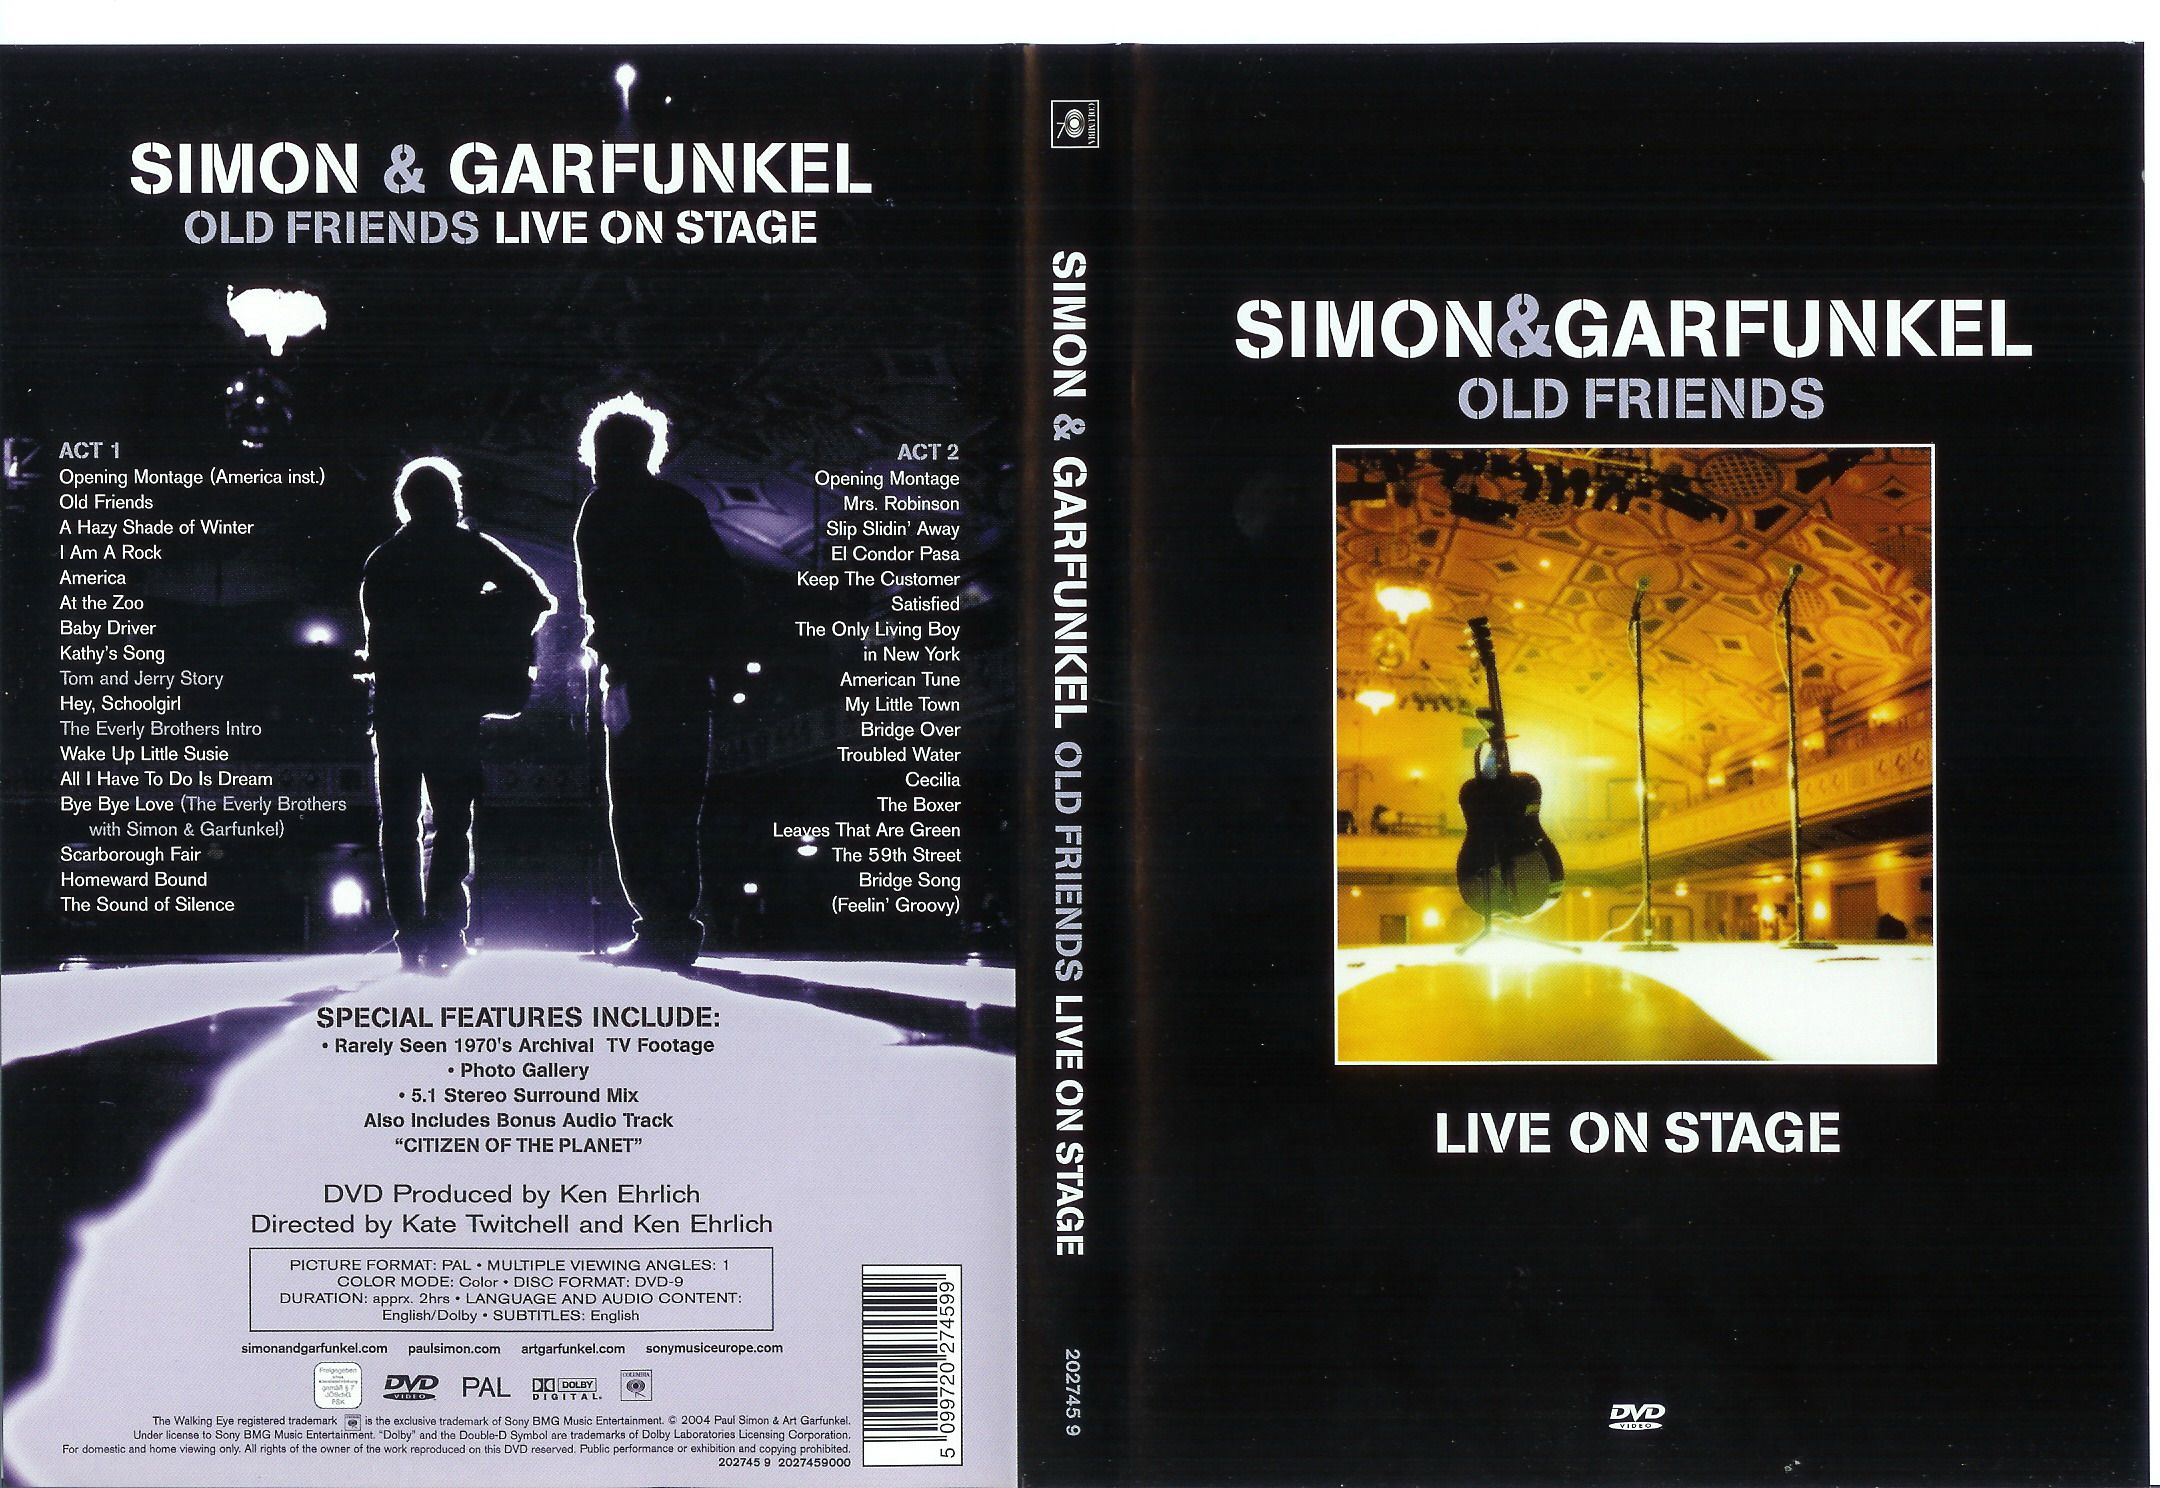 Simon & Garfunkel Old Friends Tour 2004 VIP Pass 